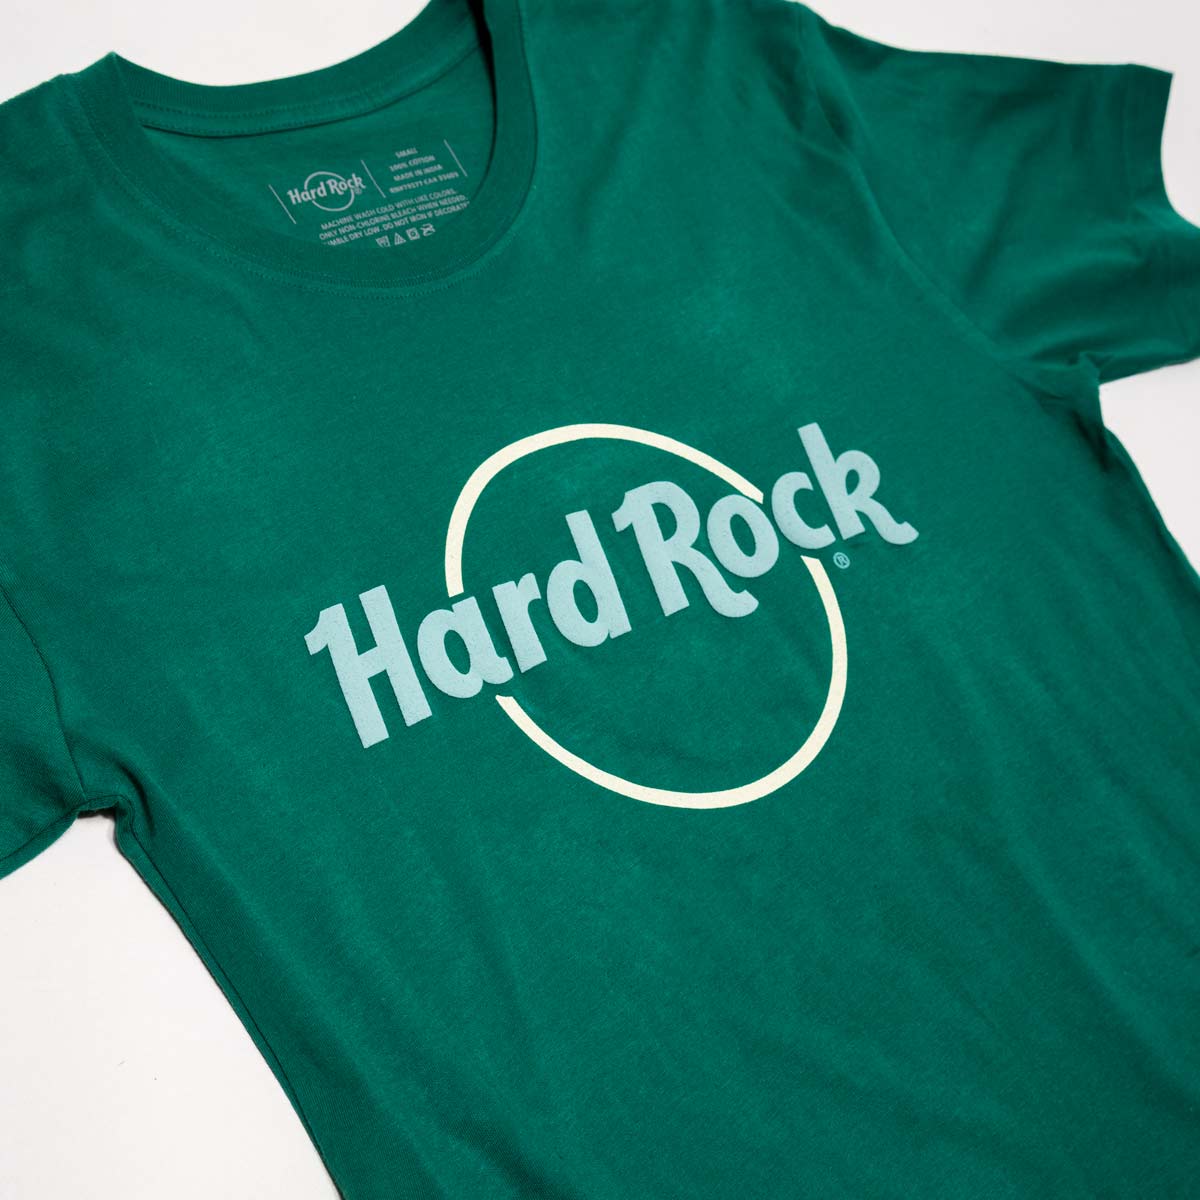 Hard Rock Adult Fit Pop of Color Tee in Deep Teal Green image number 2